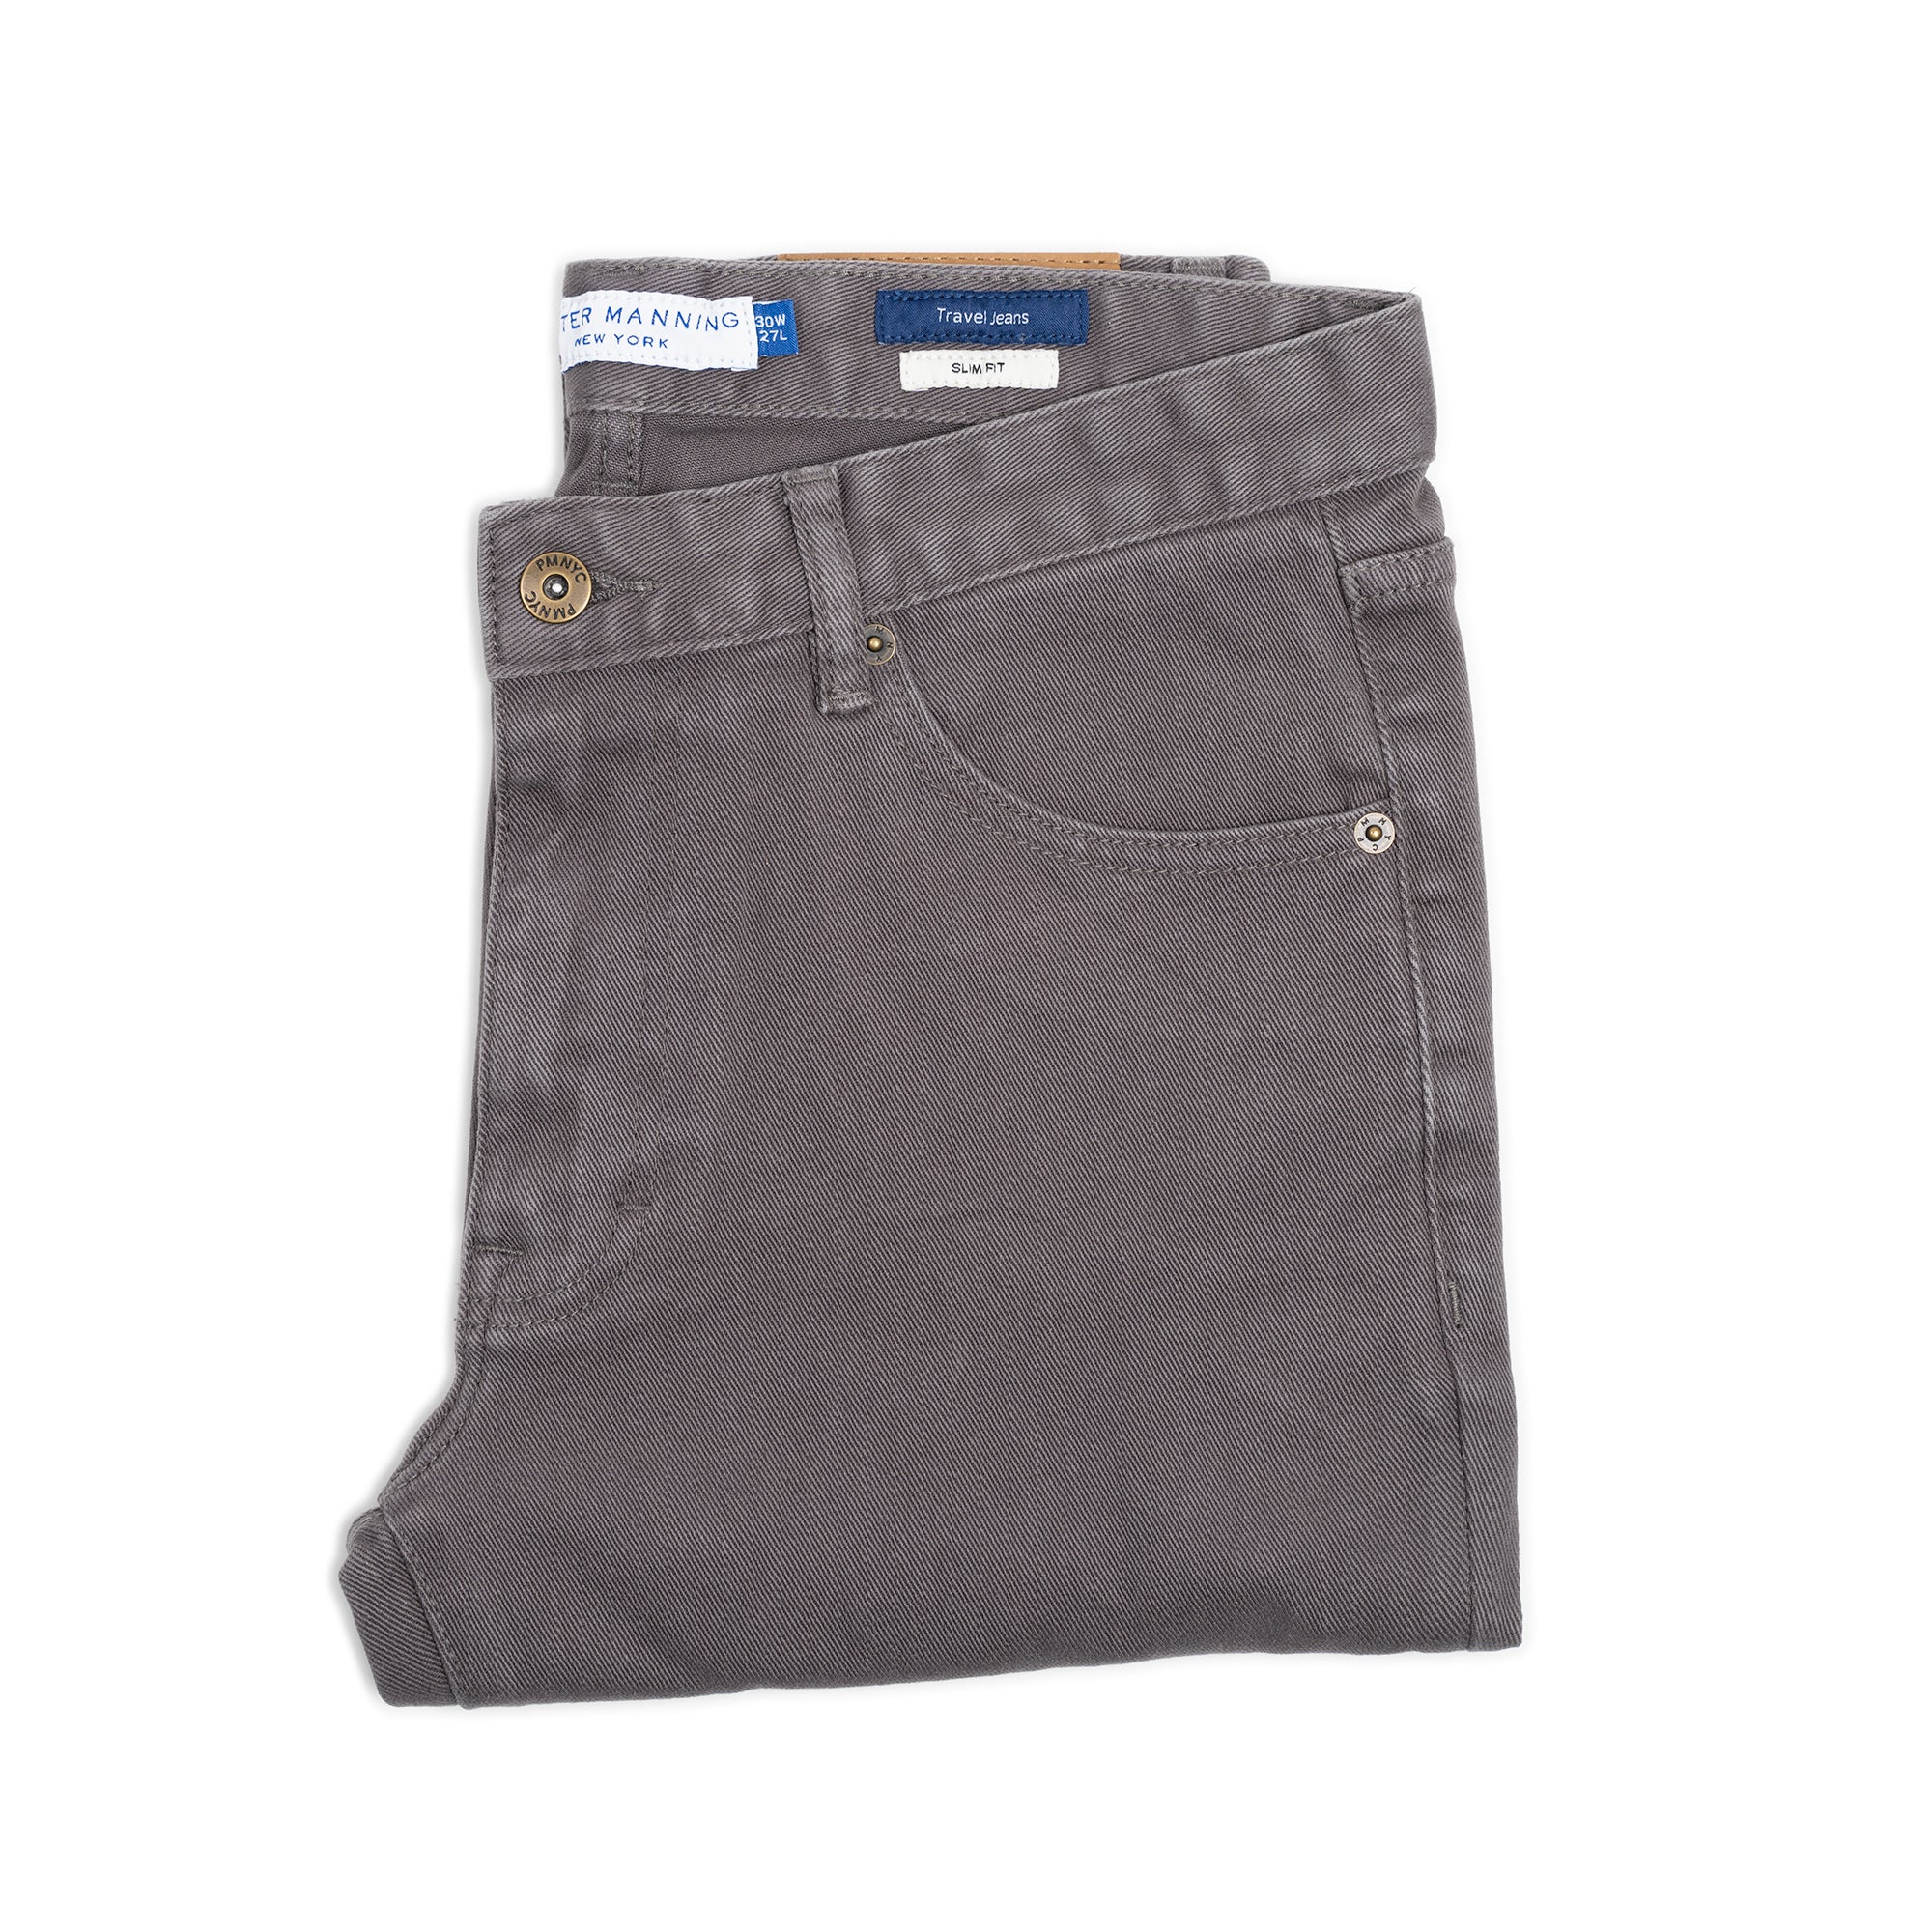 Travel Jeans Slim Fit - Dark Grey